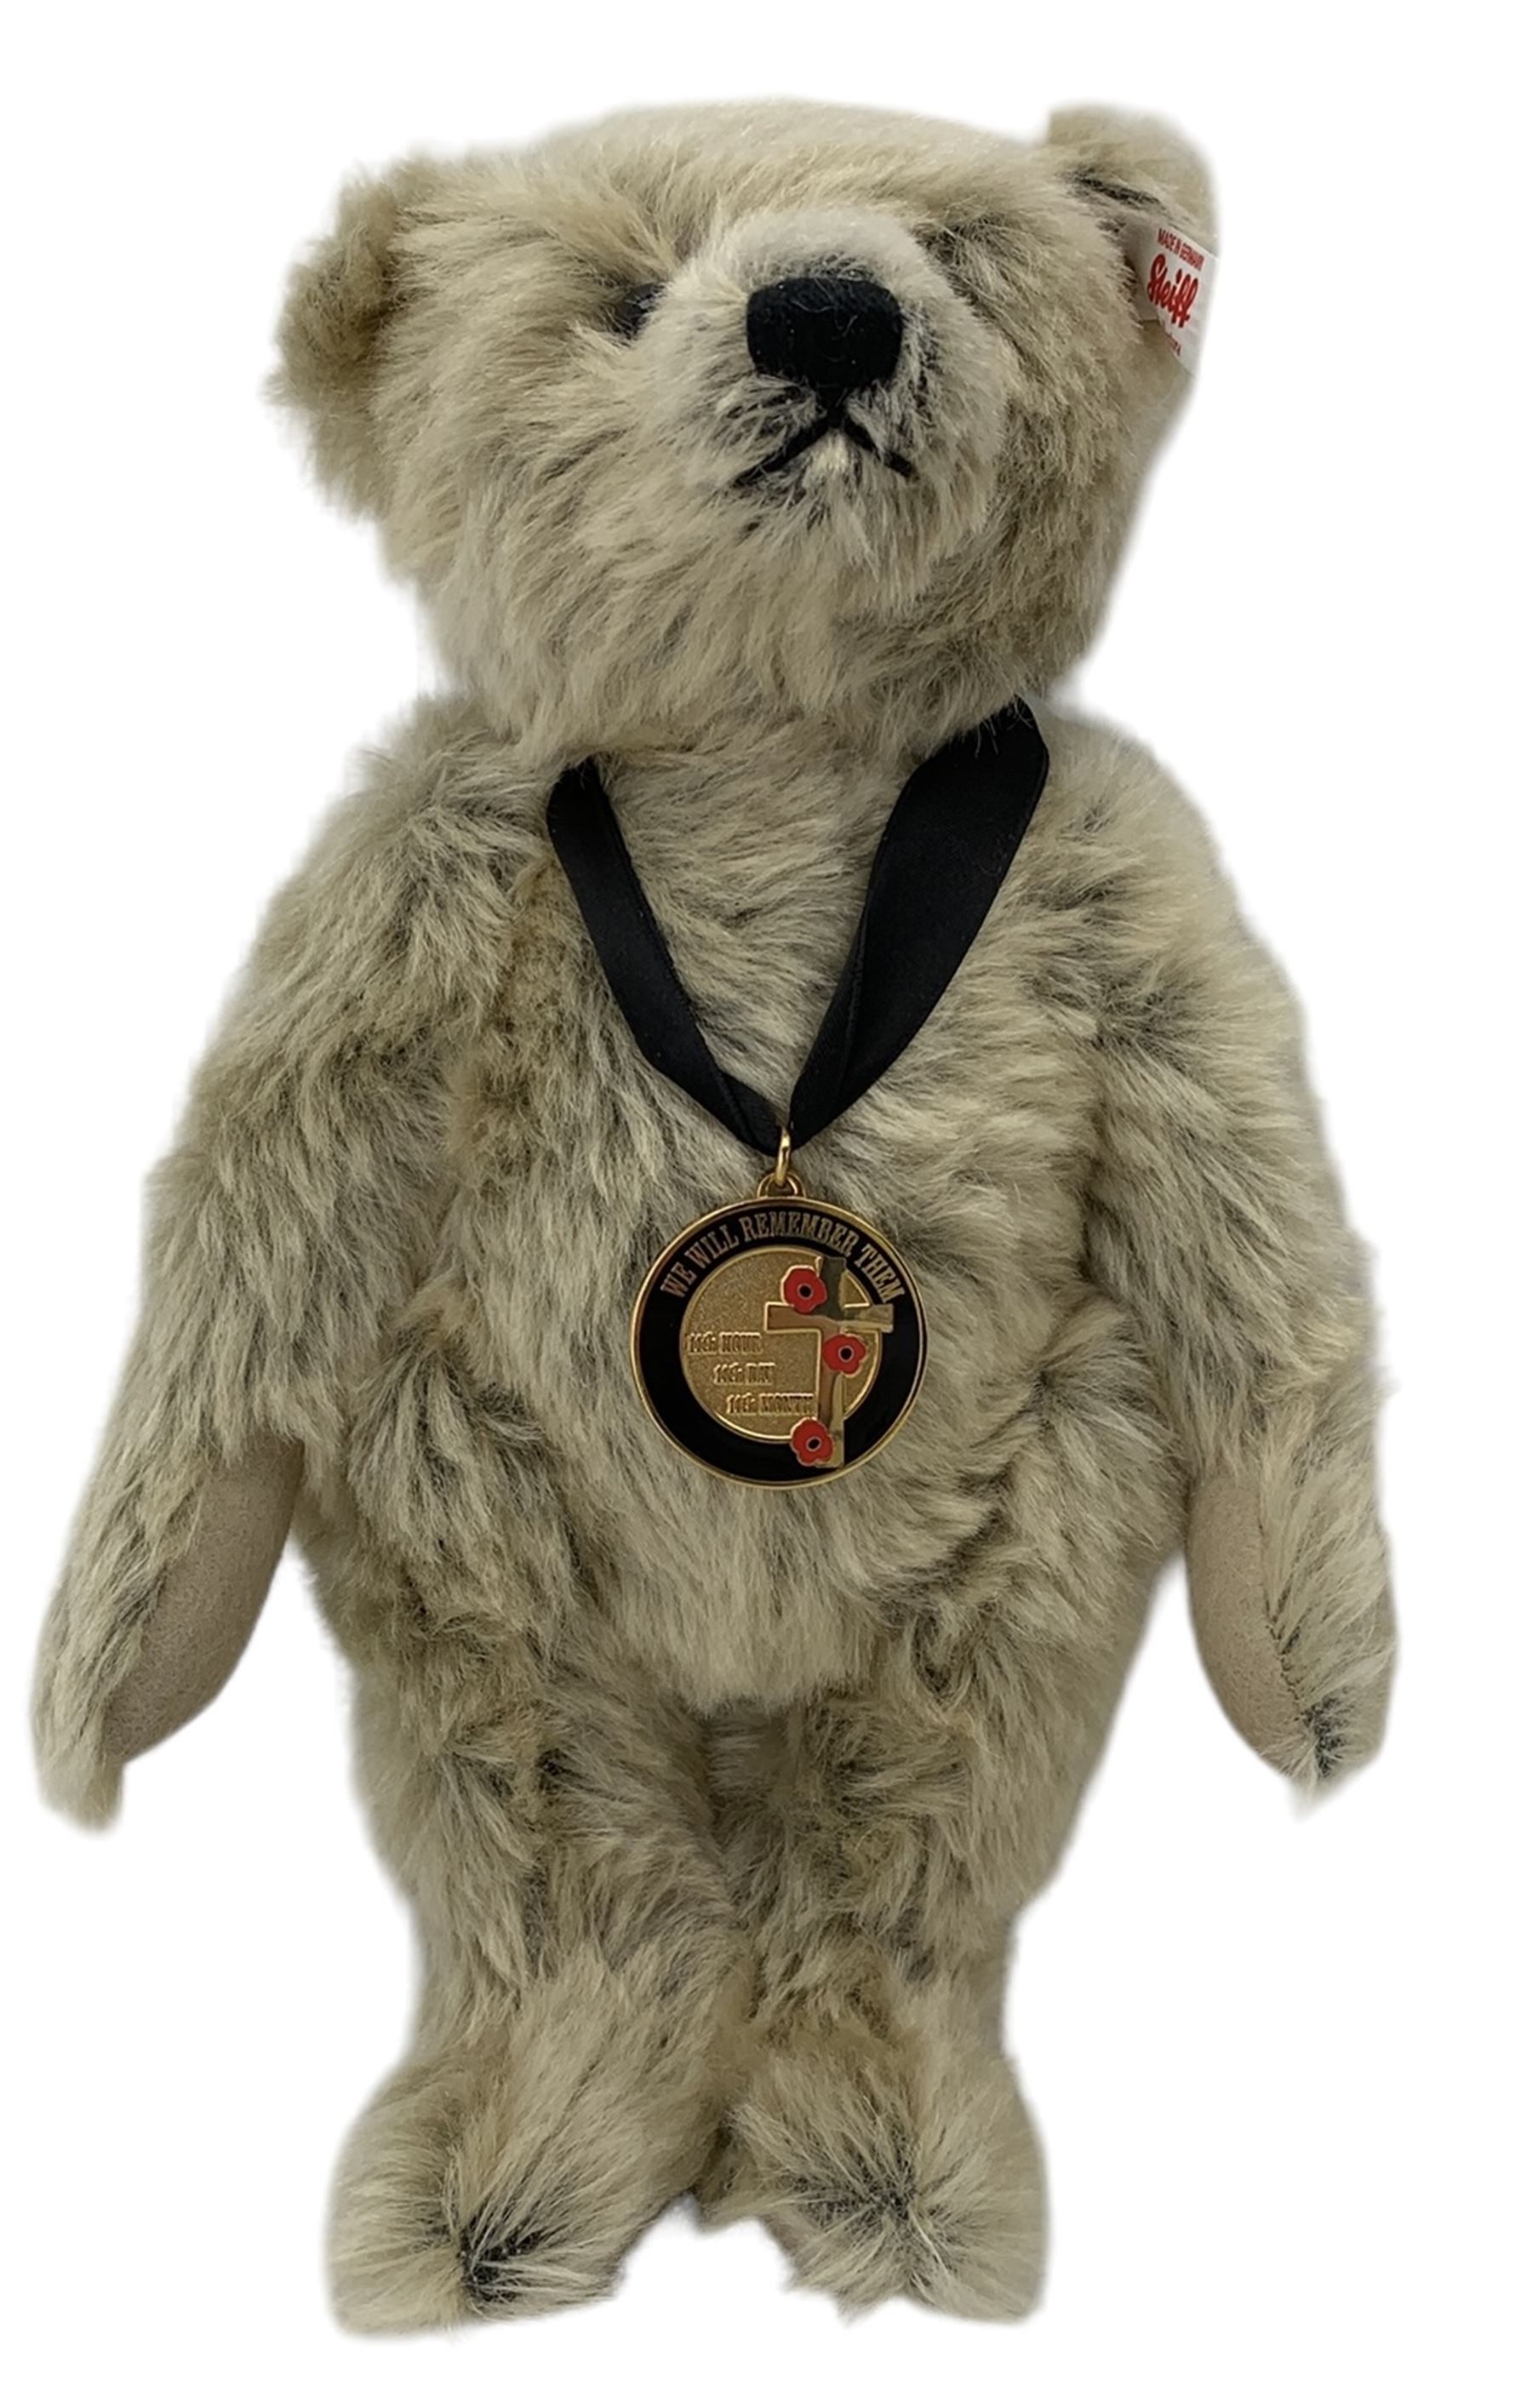 Steiff limited edition Armistice Centenary bear No.816/1918 - Image 2 of 4